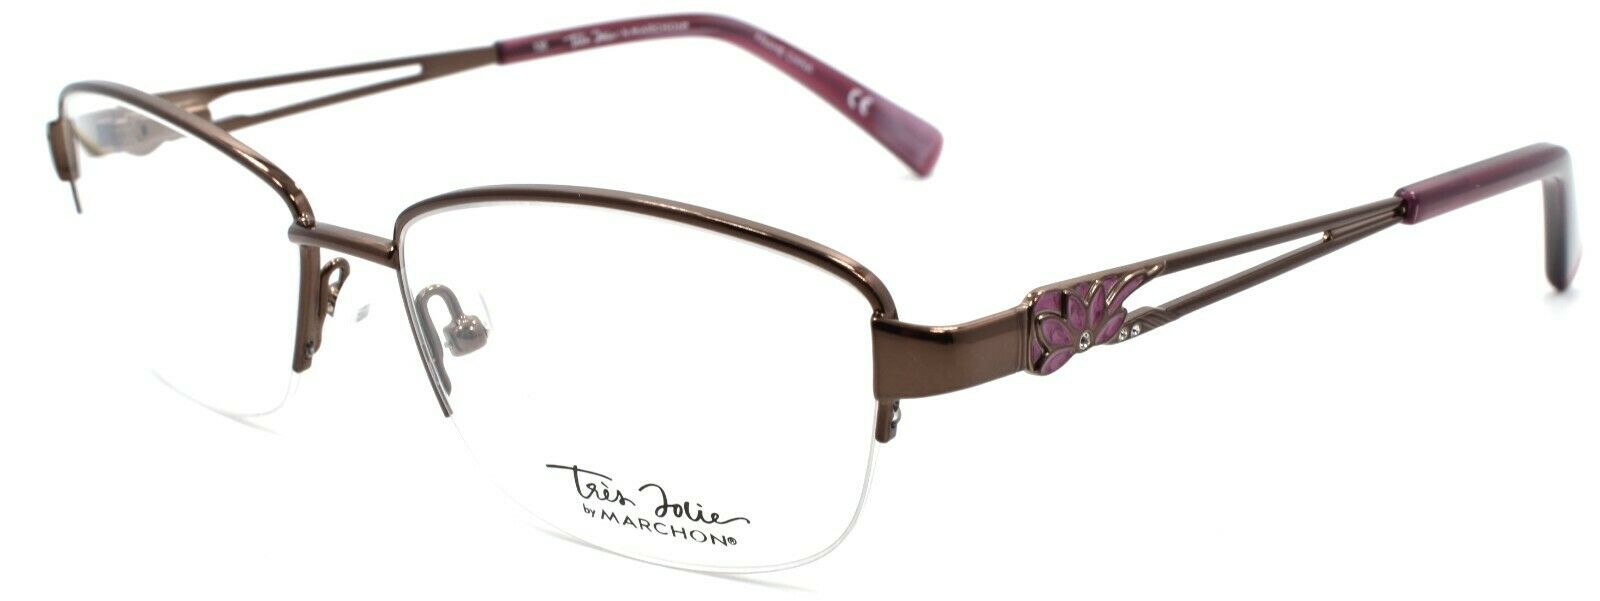 1-Marchon Tres Jolie 171 210 Women's Eyeglasses Frames Half-rim 52-16-135 Brown-886895262866-IKSpecs